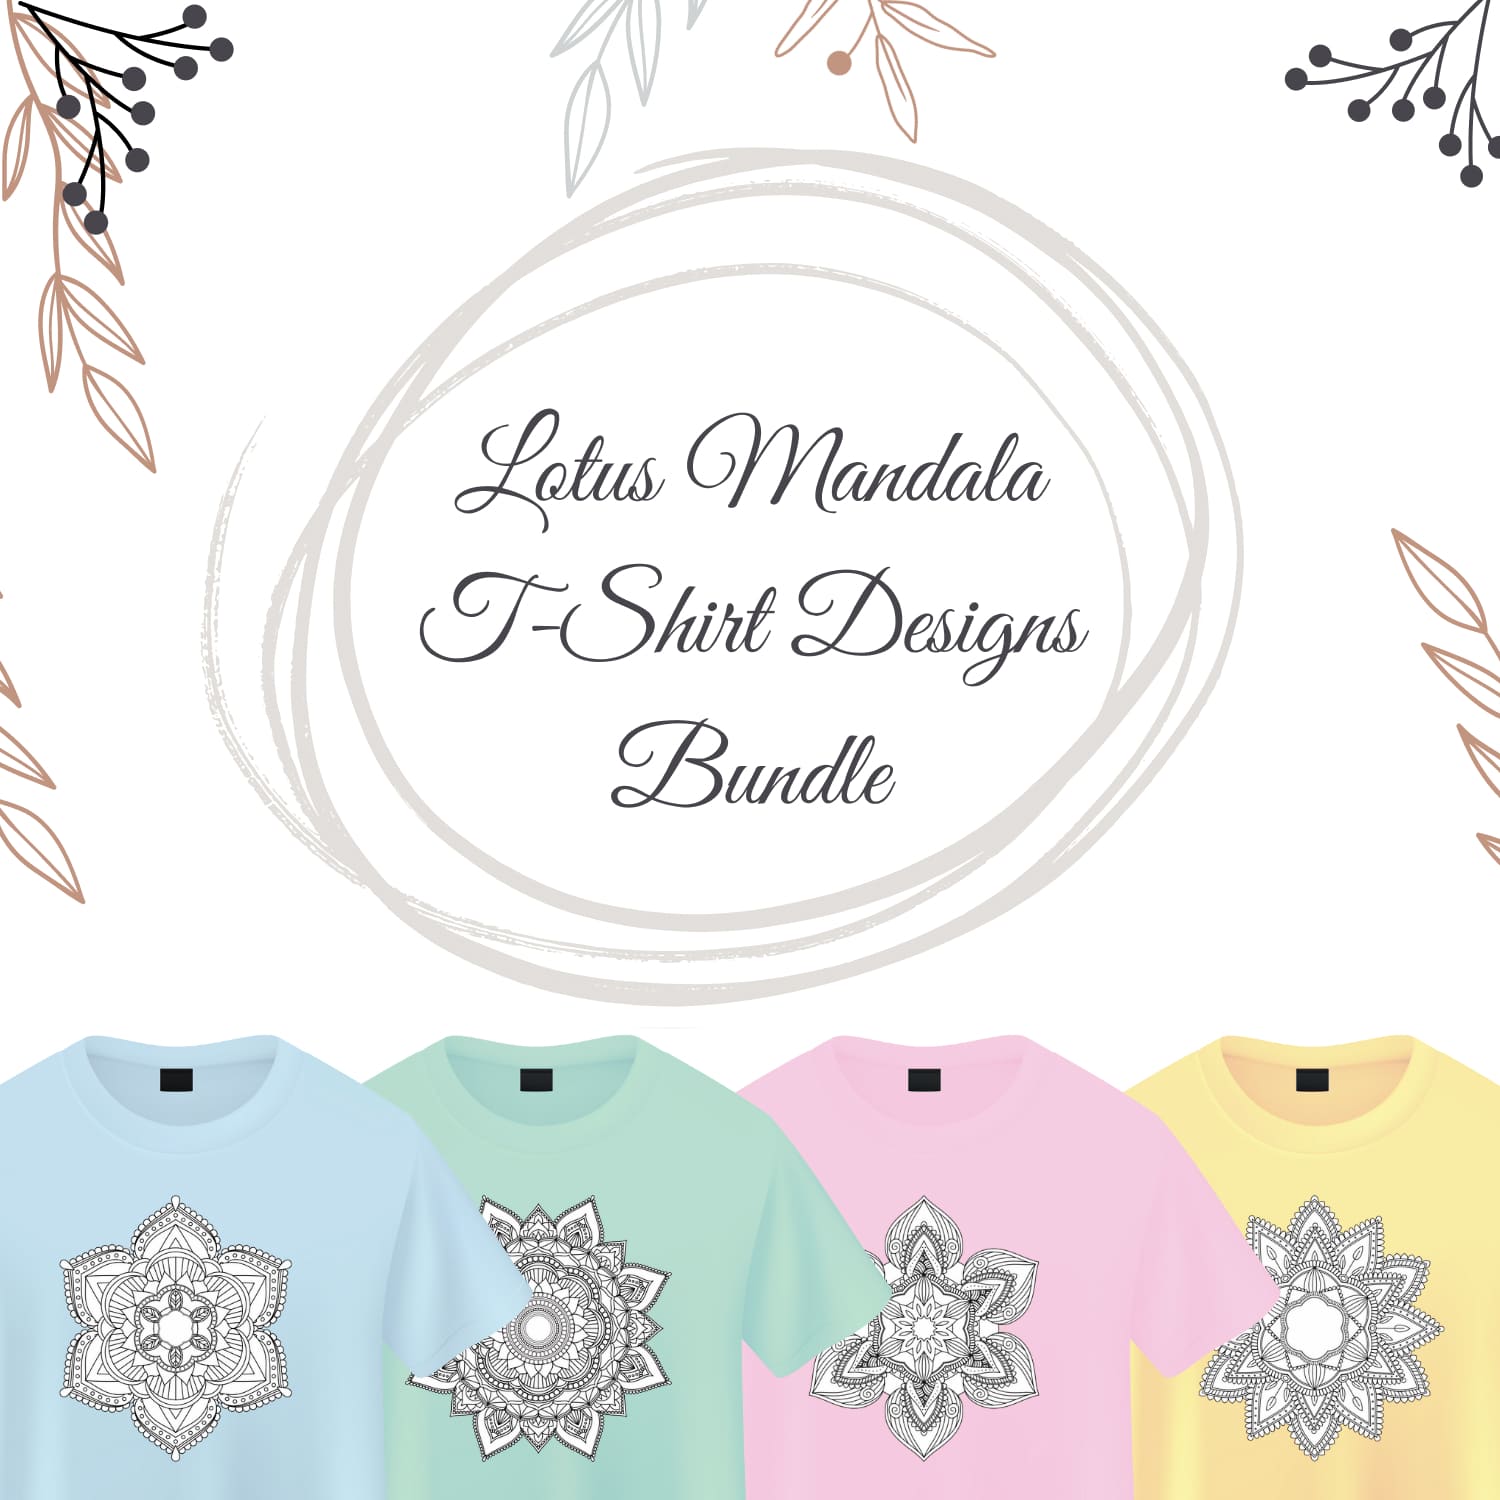 Lotus Mandala T-shirt Designs Bundle.